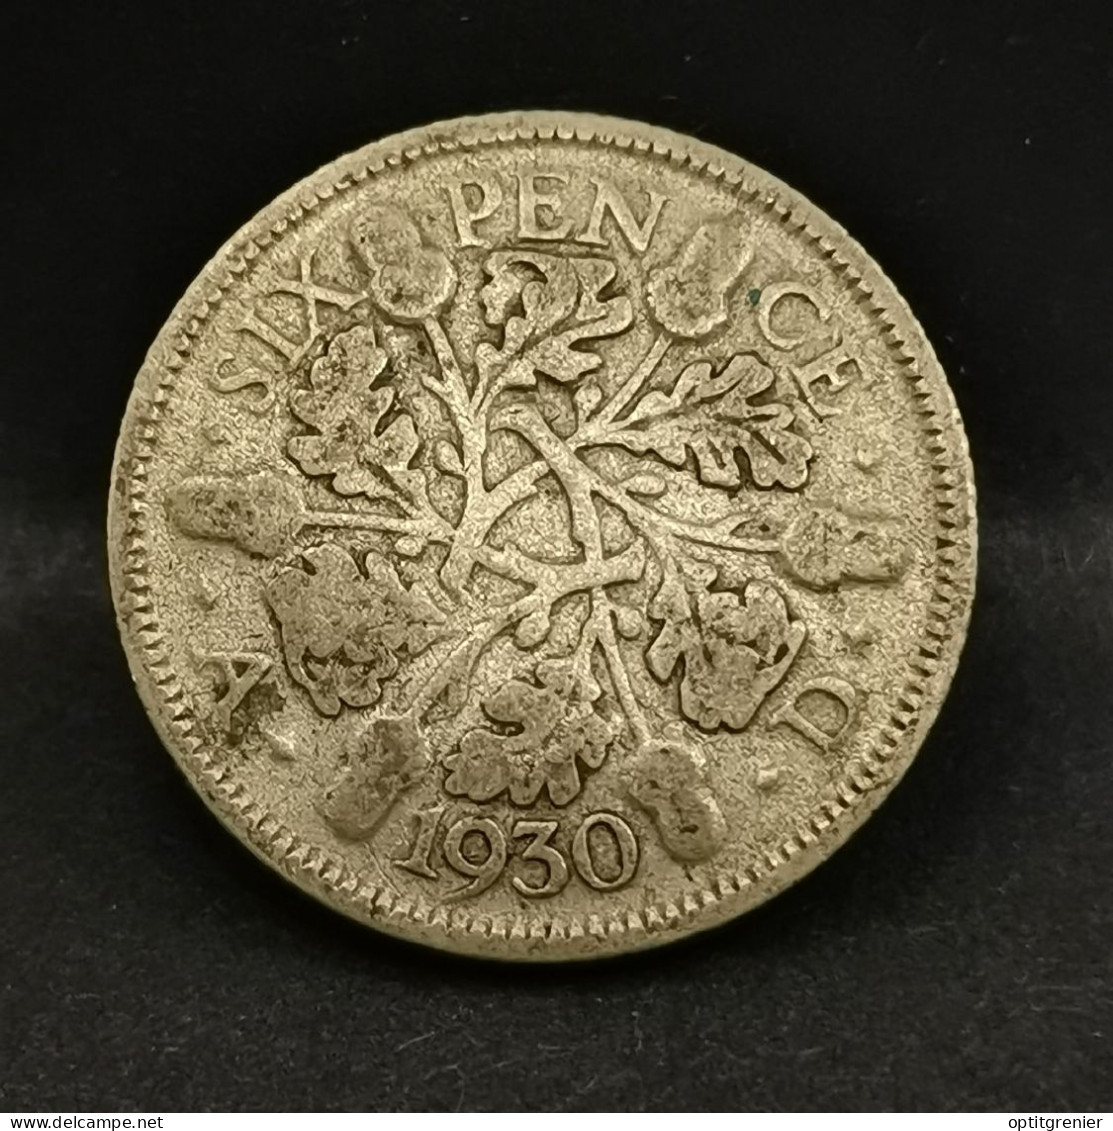 6 PENCE ARGENT 1930 GEORGE V 2e EFFIGIE 2e TYPE ROYAUME UNI / UNITED KINGDOM SILVER - H. 6 Pence